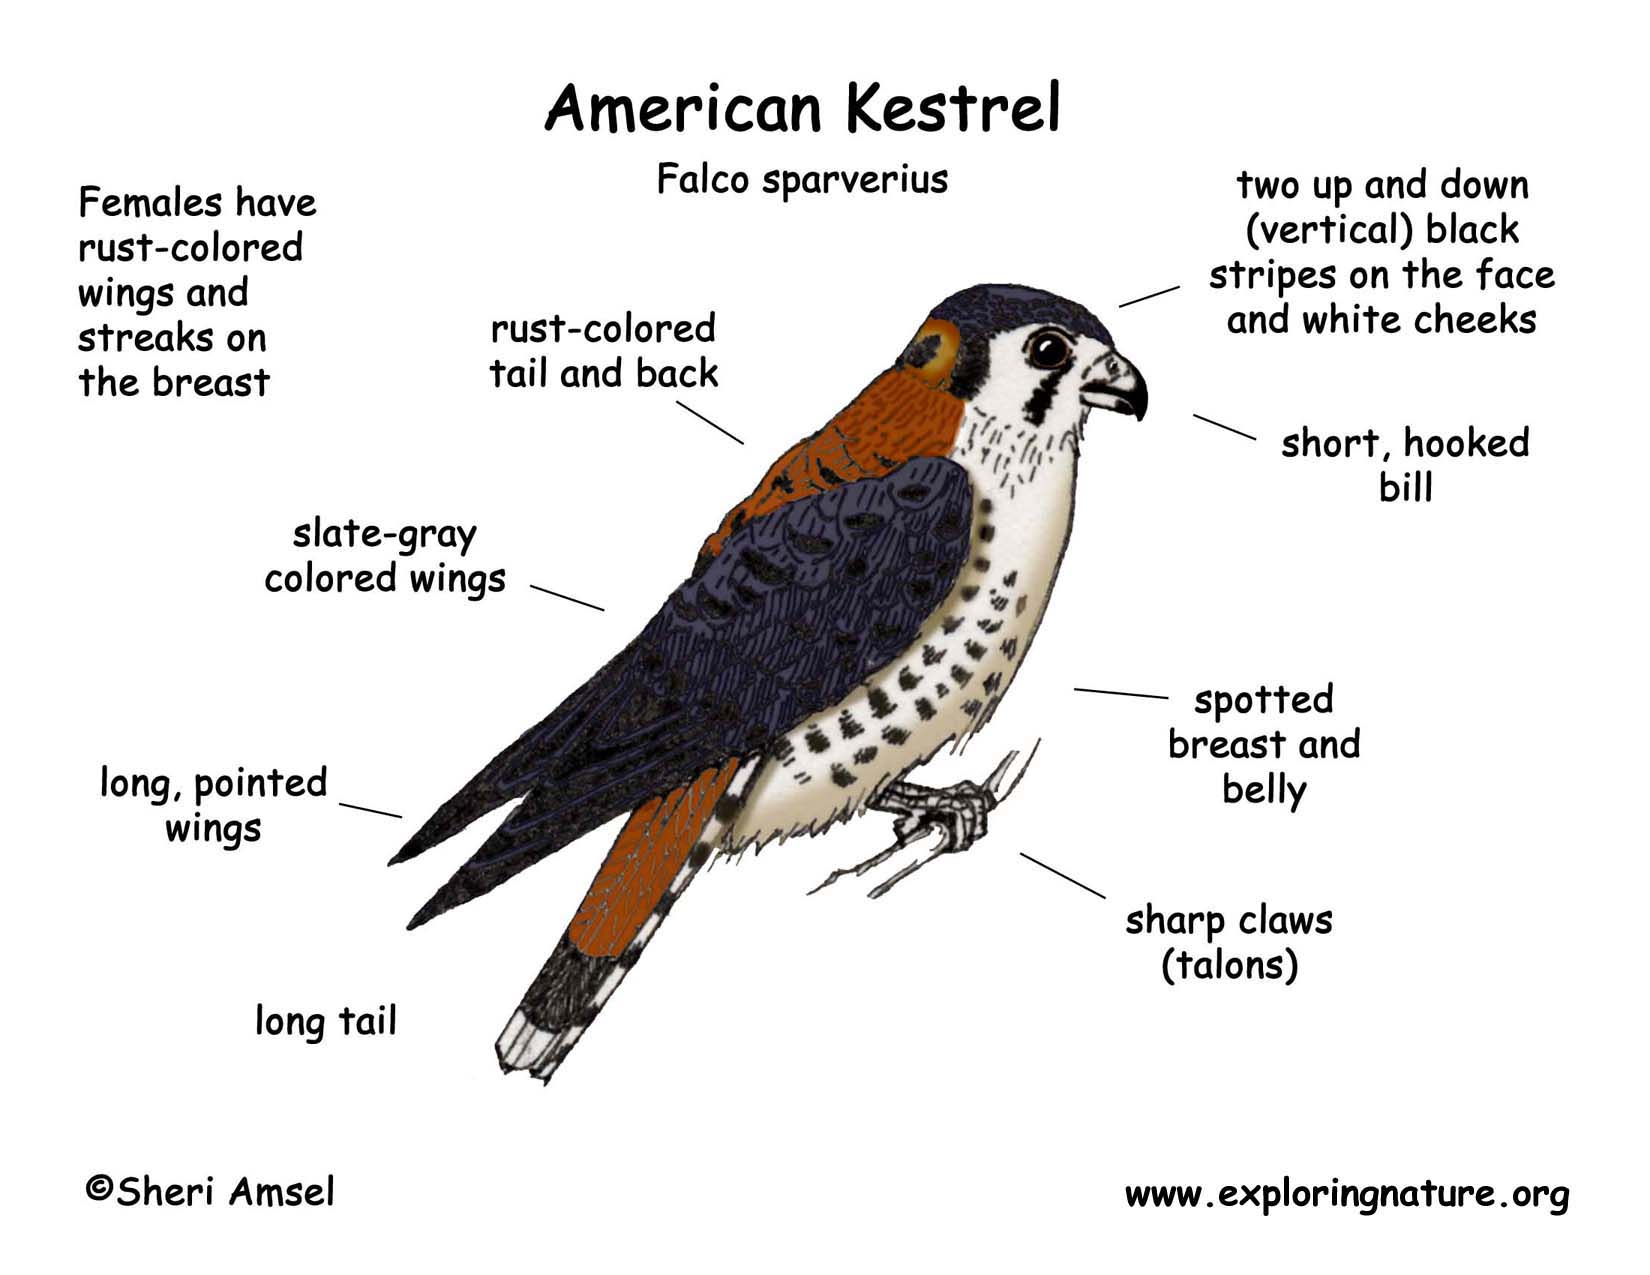 Kestrel (American)